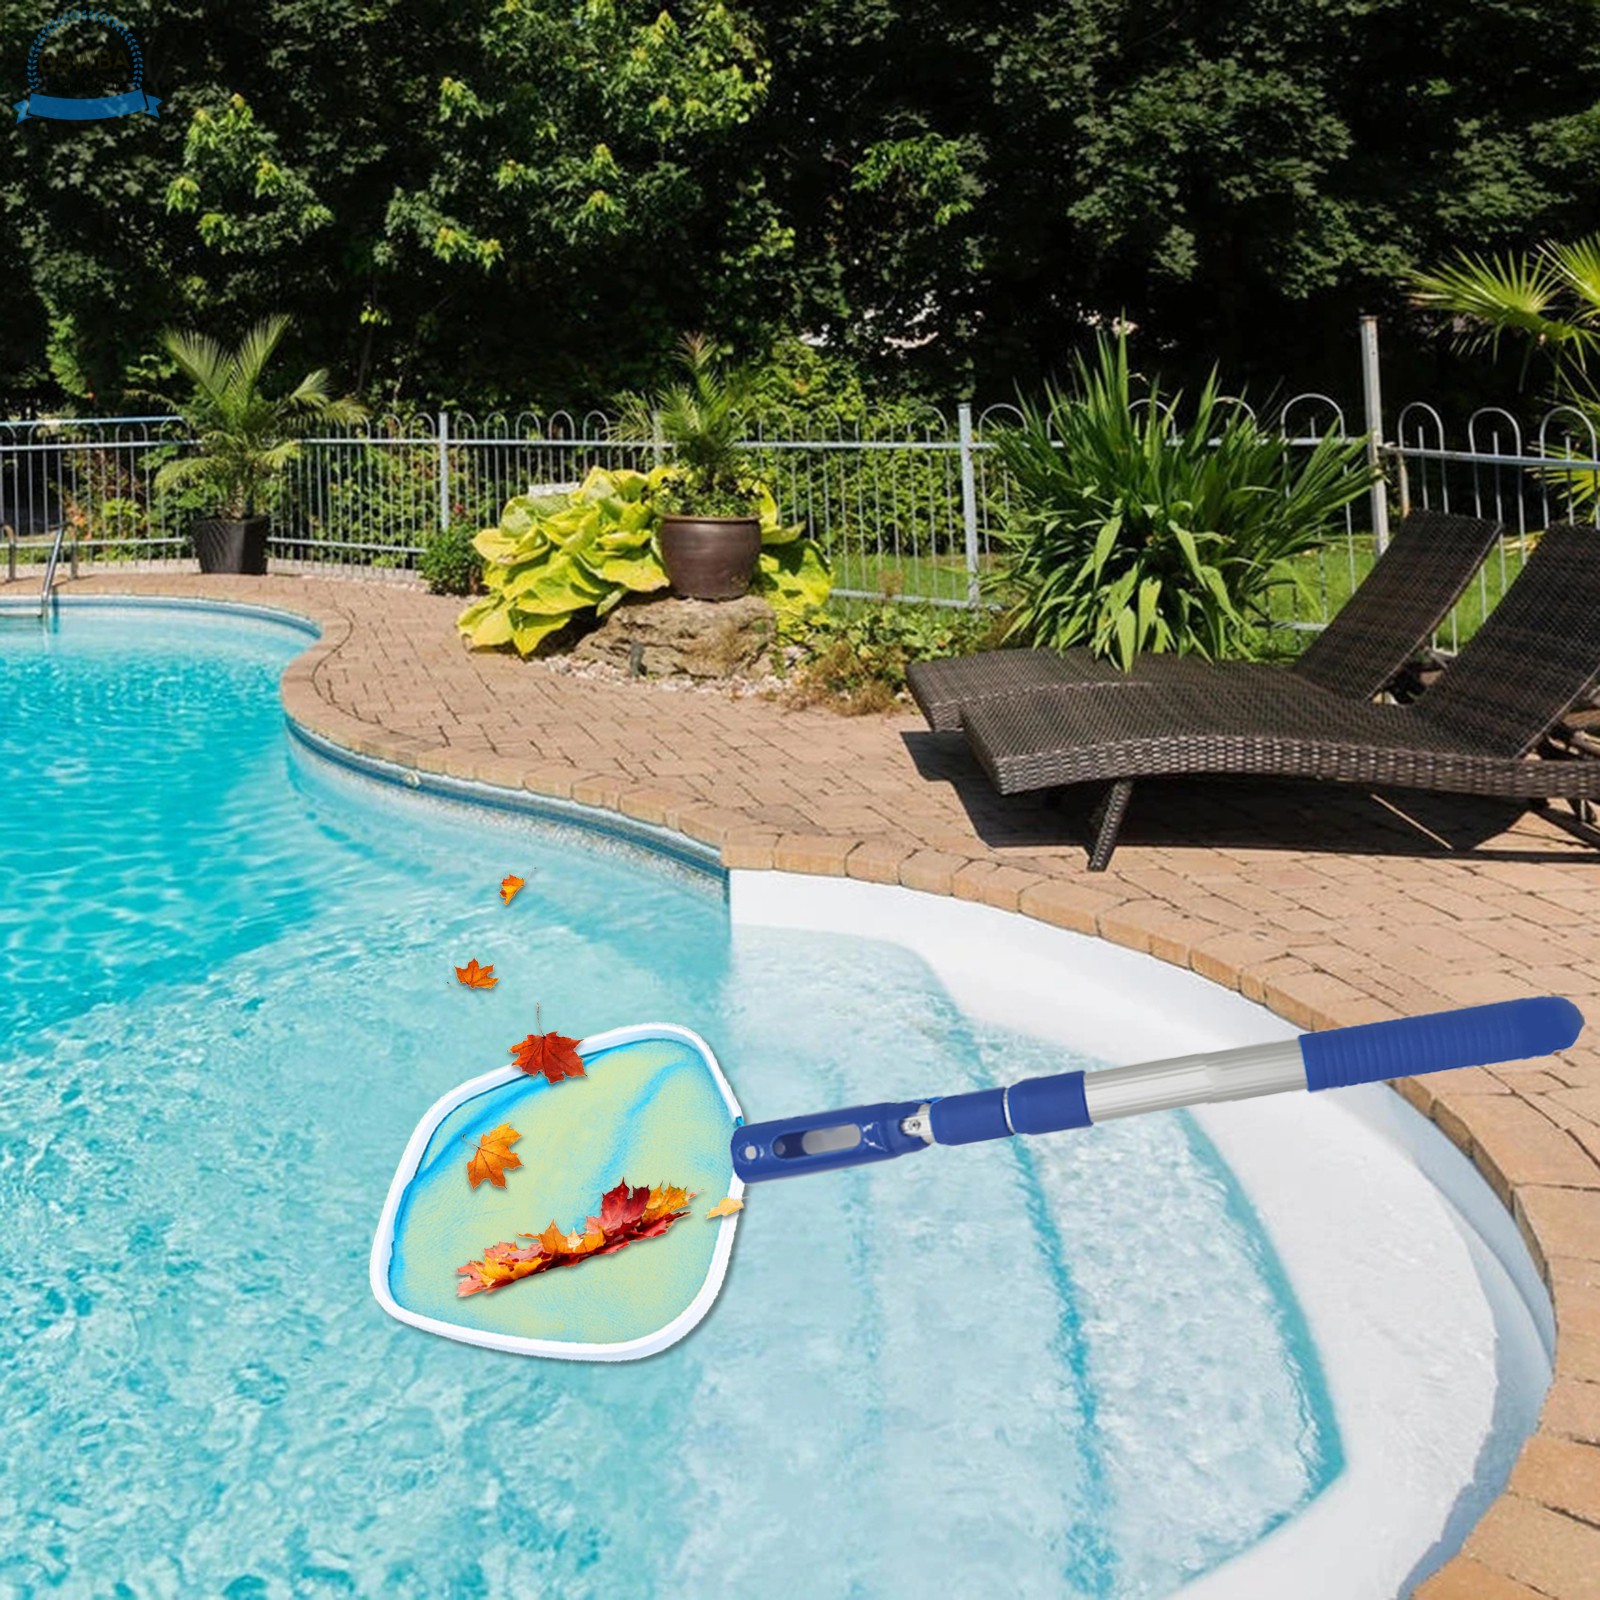 Qswba Swimming Pool Skimmer Net Heavy Duty Leaf Skimmer Net with Strong Reinforced Aluminum Alloy Frame